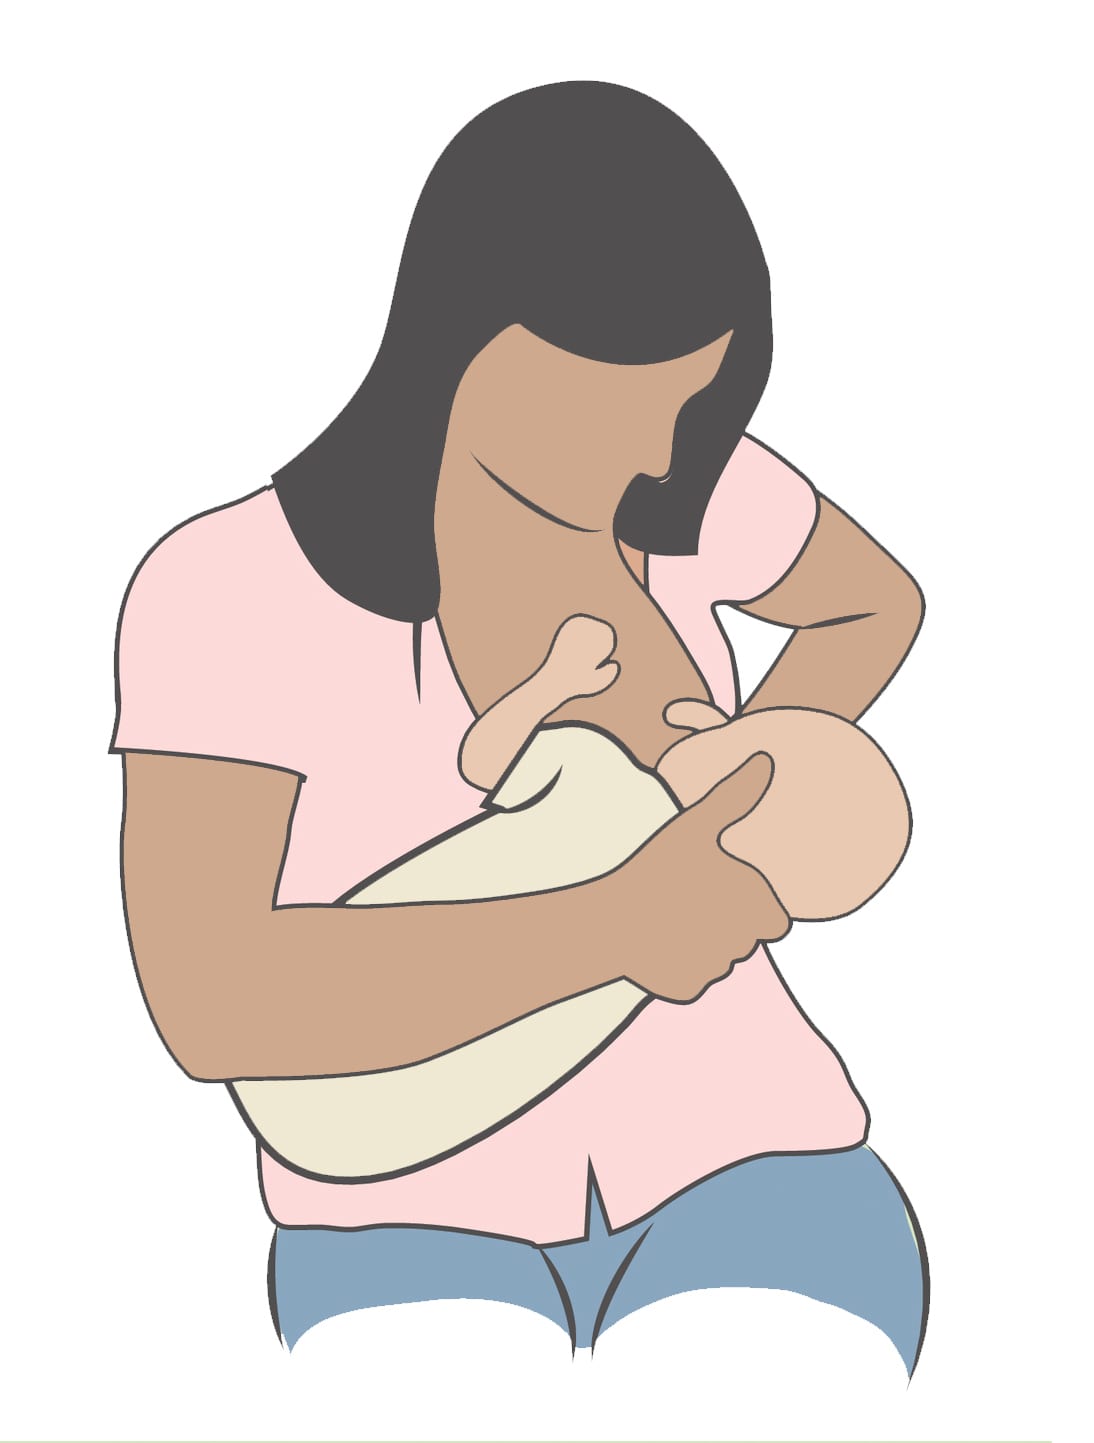 cradle breastfeeding